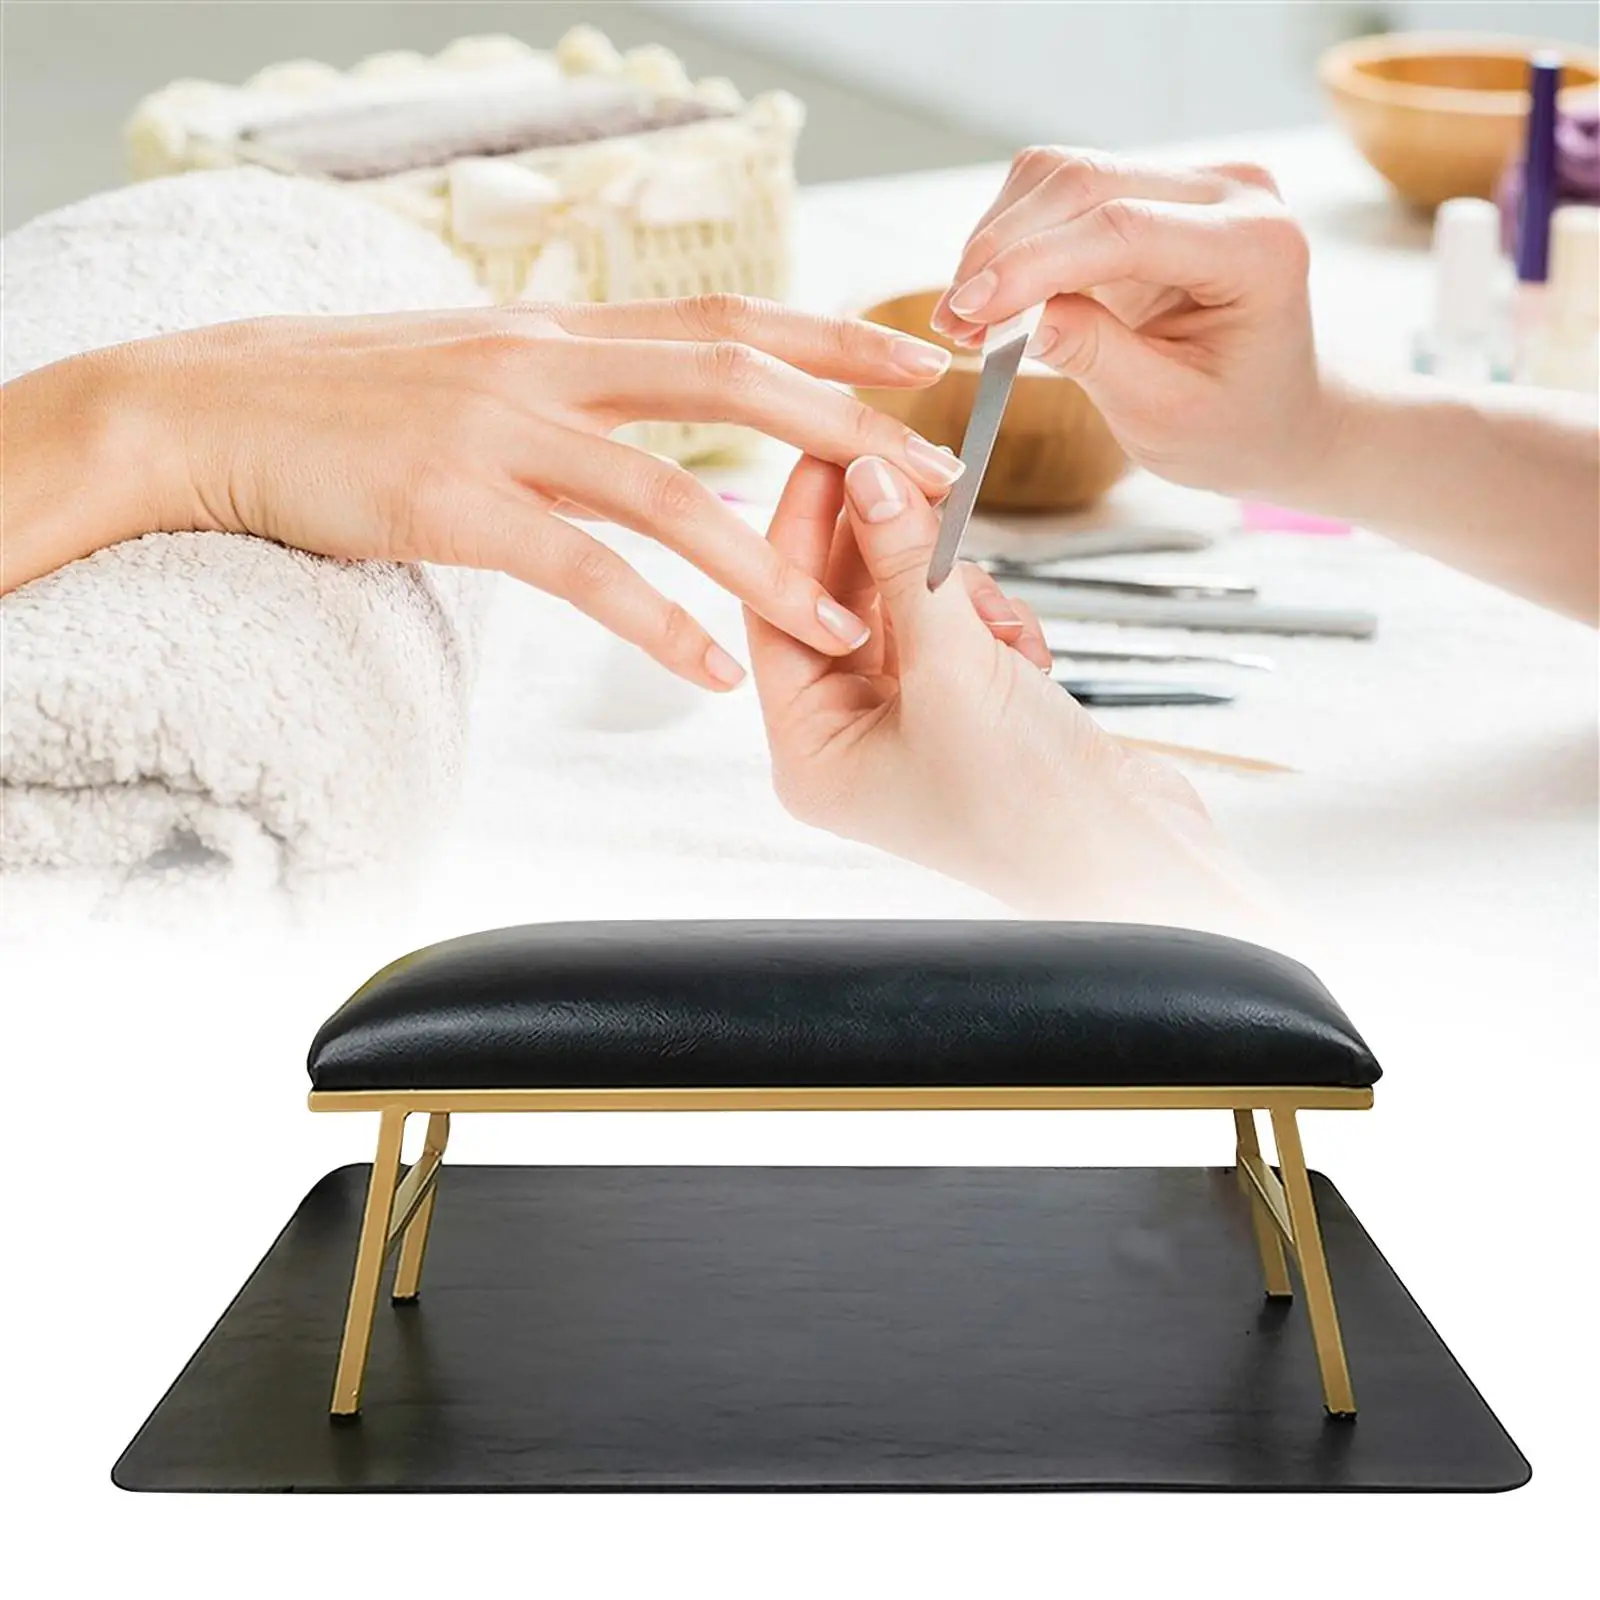 Nail Hand Pillow and Table Mat Set Nail Art Cushion Mat Set Accessories, Non Slip Wrist Arm Pad, Nail Hand Rest for Salon